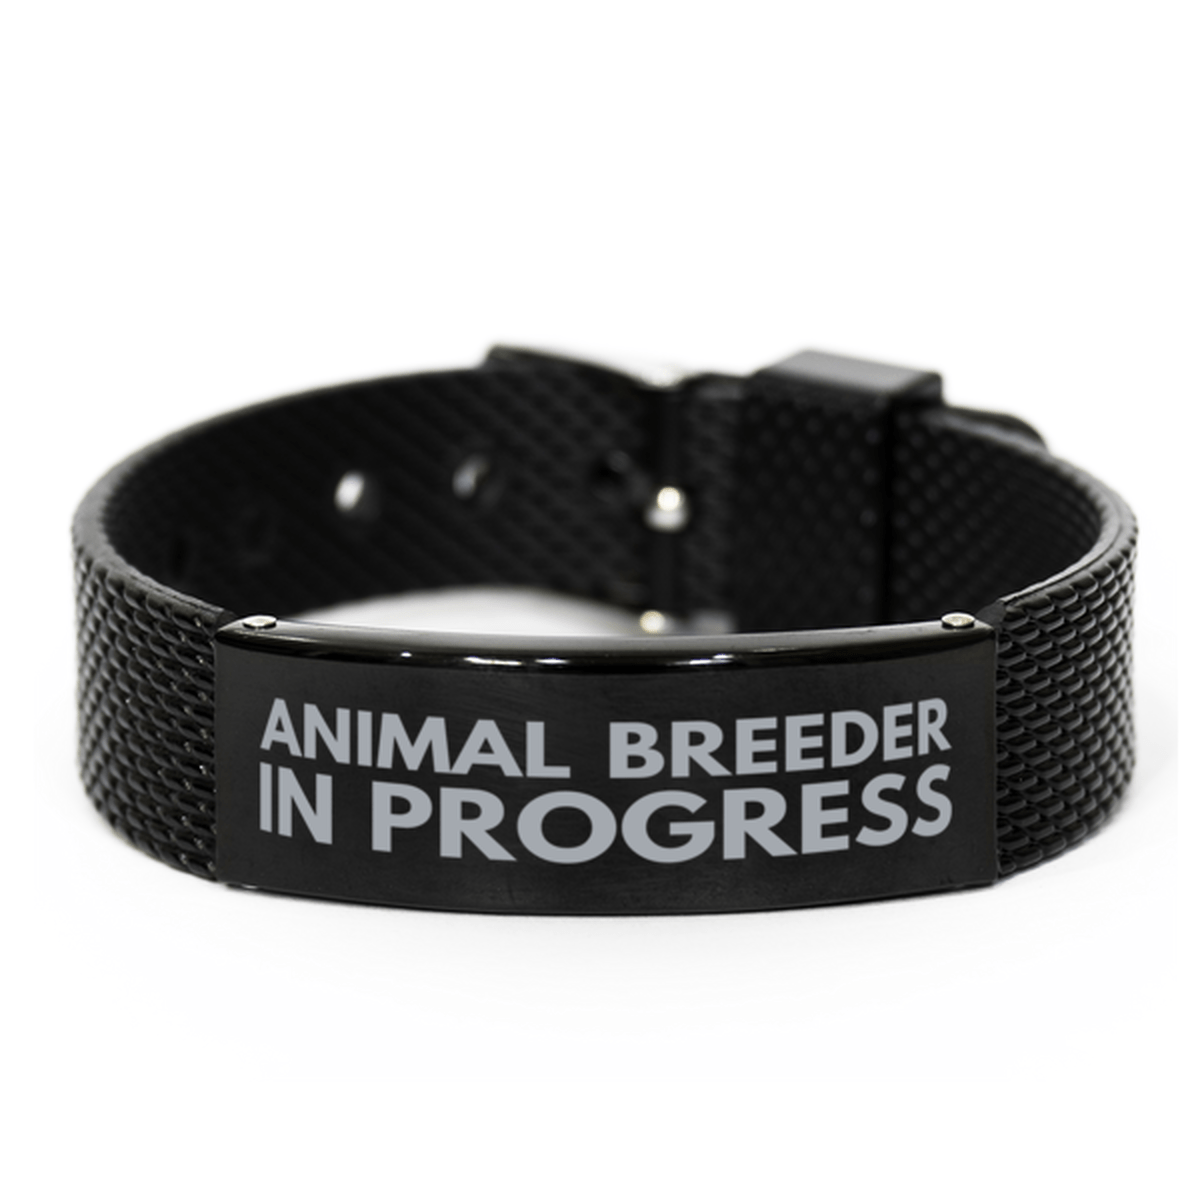 Inspirational Animal Breeder Black Shark Mesh Bracelet, Animal Breeder In Progress, Best Graduation Gifts for Students